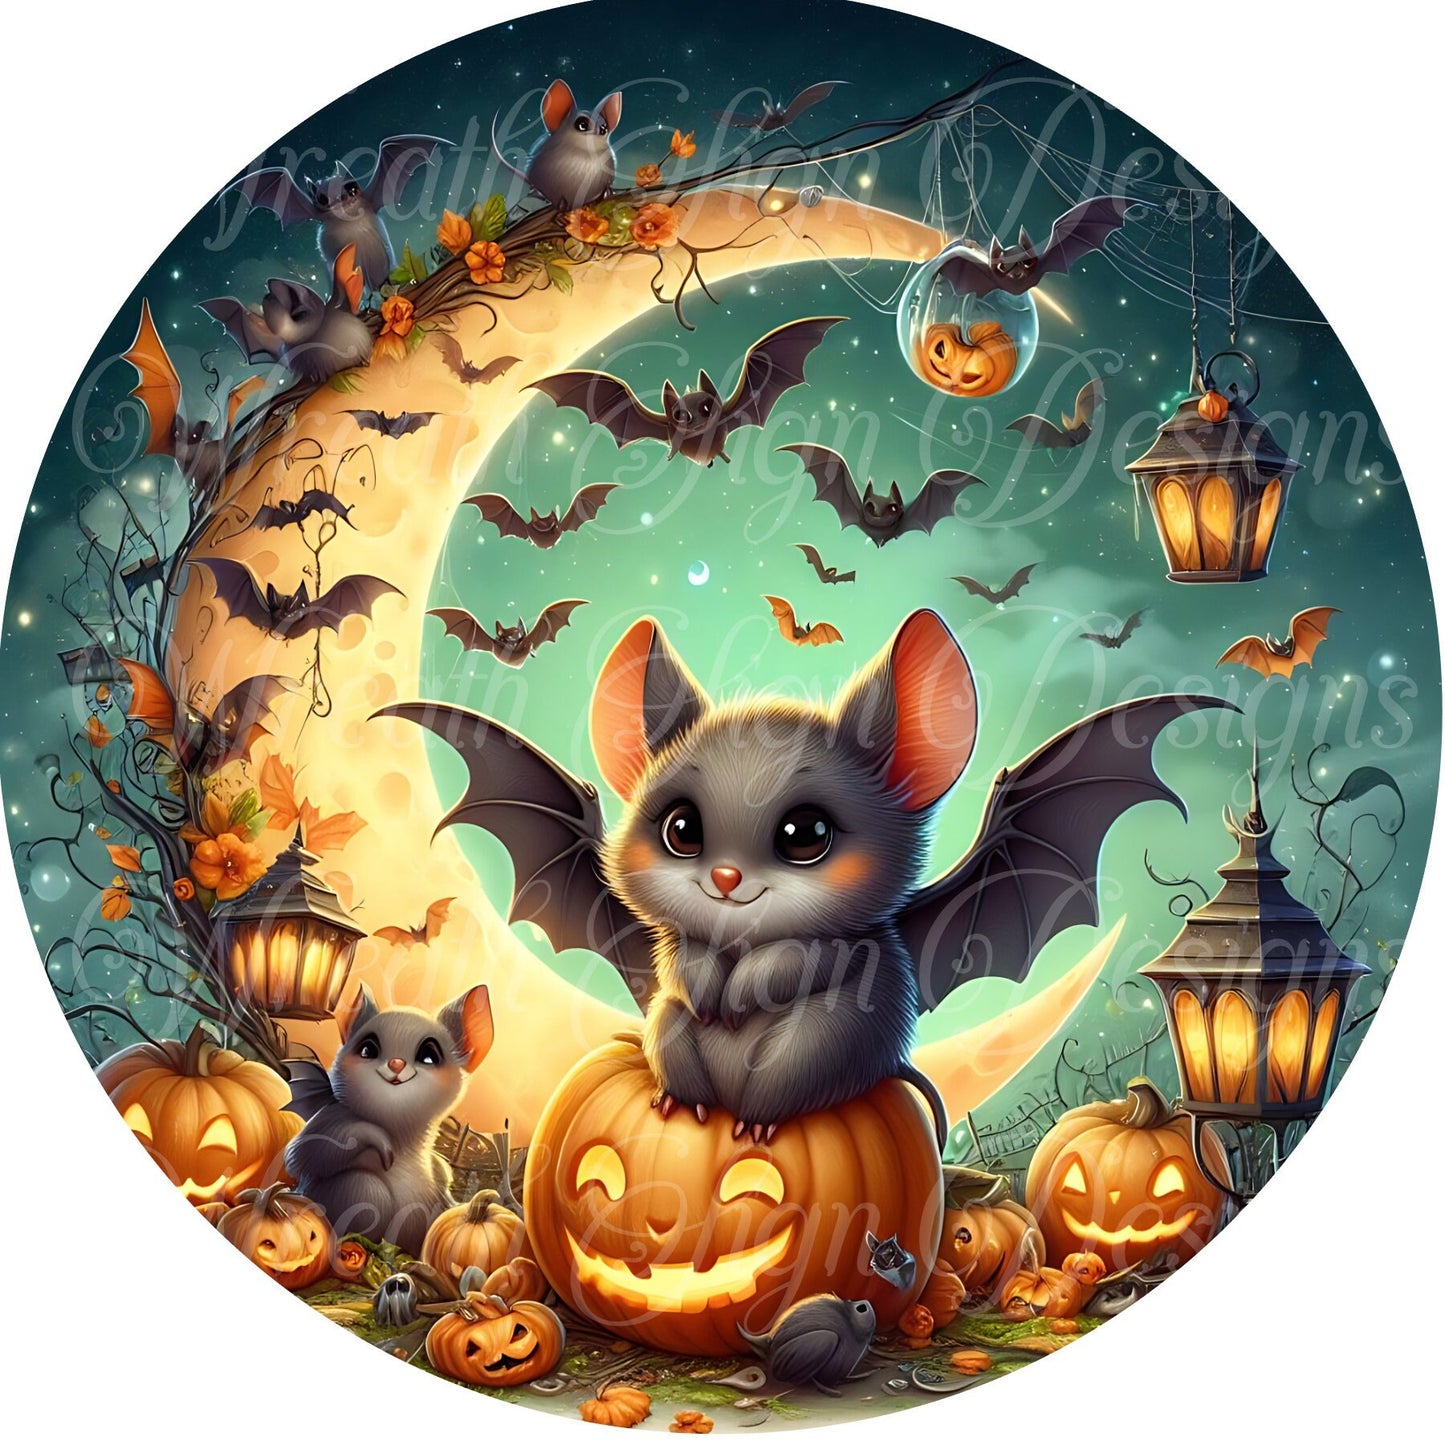 Bats and Pumpkins Halloween round metal wreath sign, sign for wreaths, attachment, center, plaque